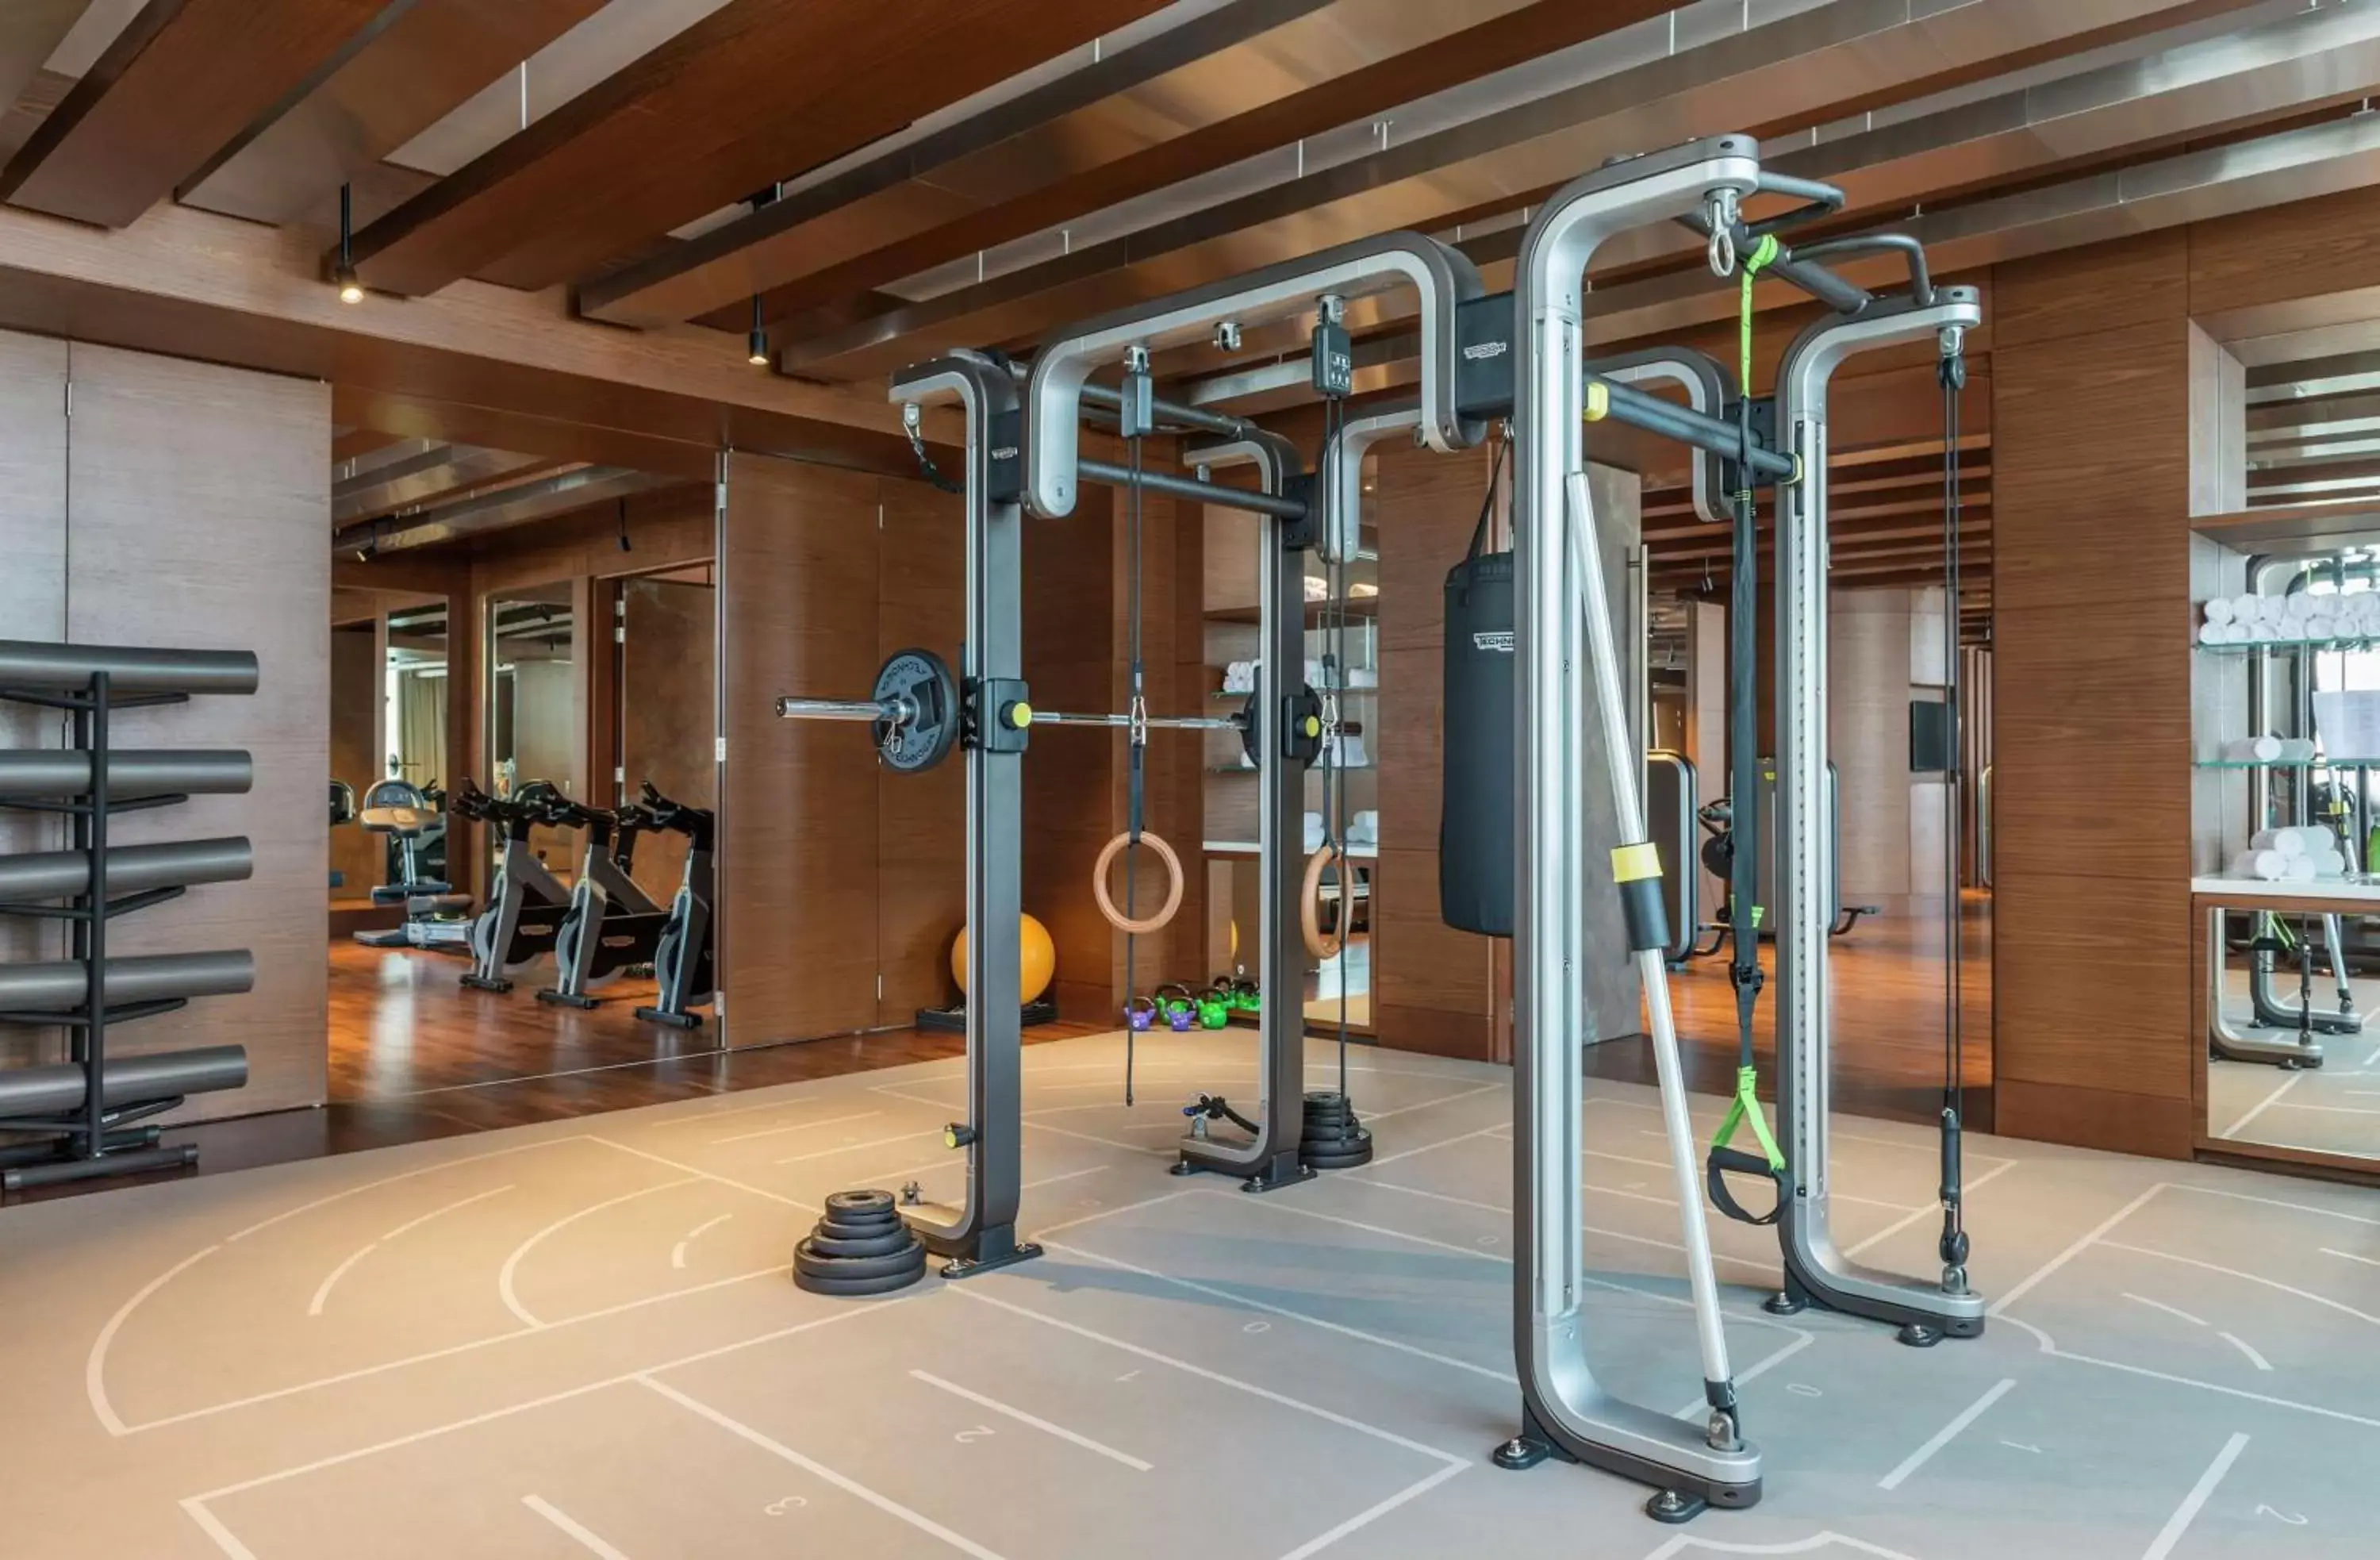 Fitness centre/facilities, Fitness Center/Facilities in Hilton Dubai Al Habtoor City